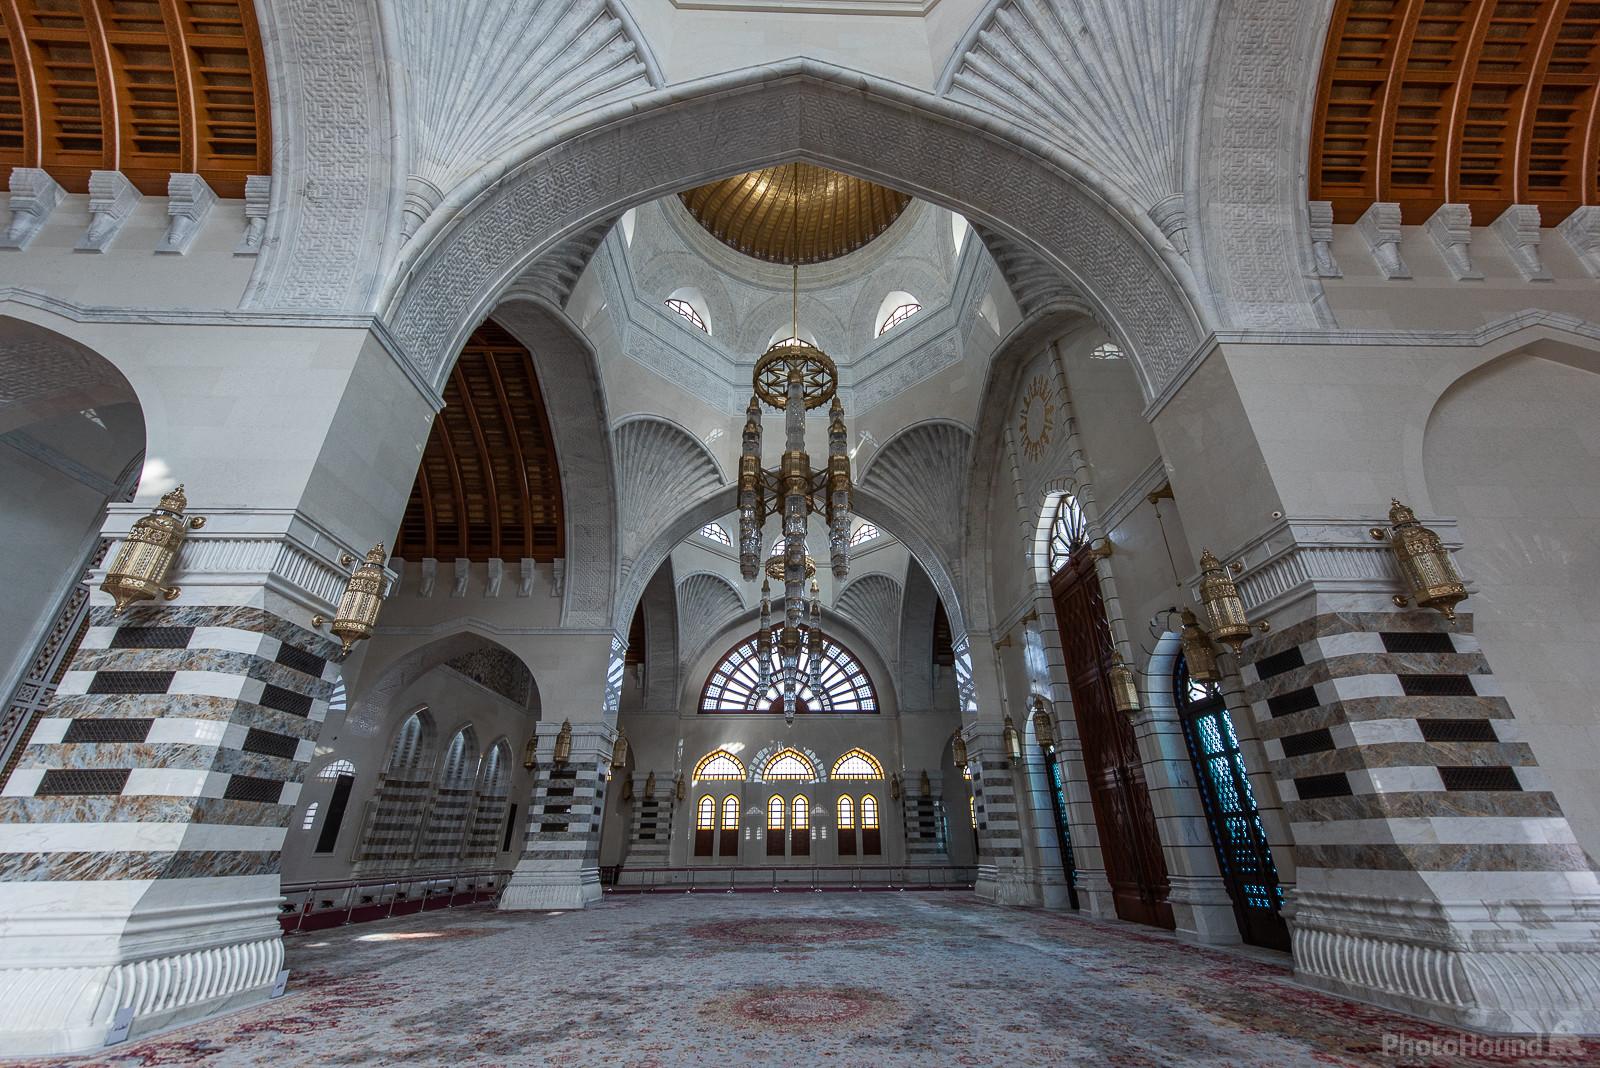 Image of Mohammed Al Ameen Mosque, Muscat, Oman by Miro Podgoršek